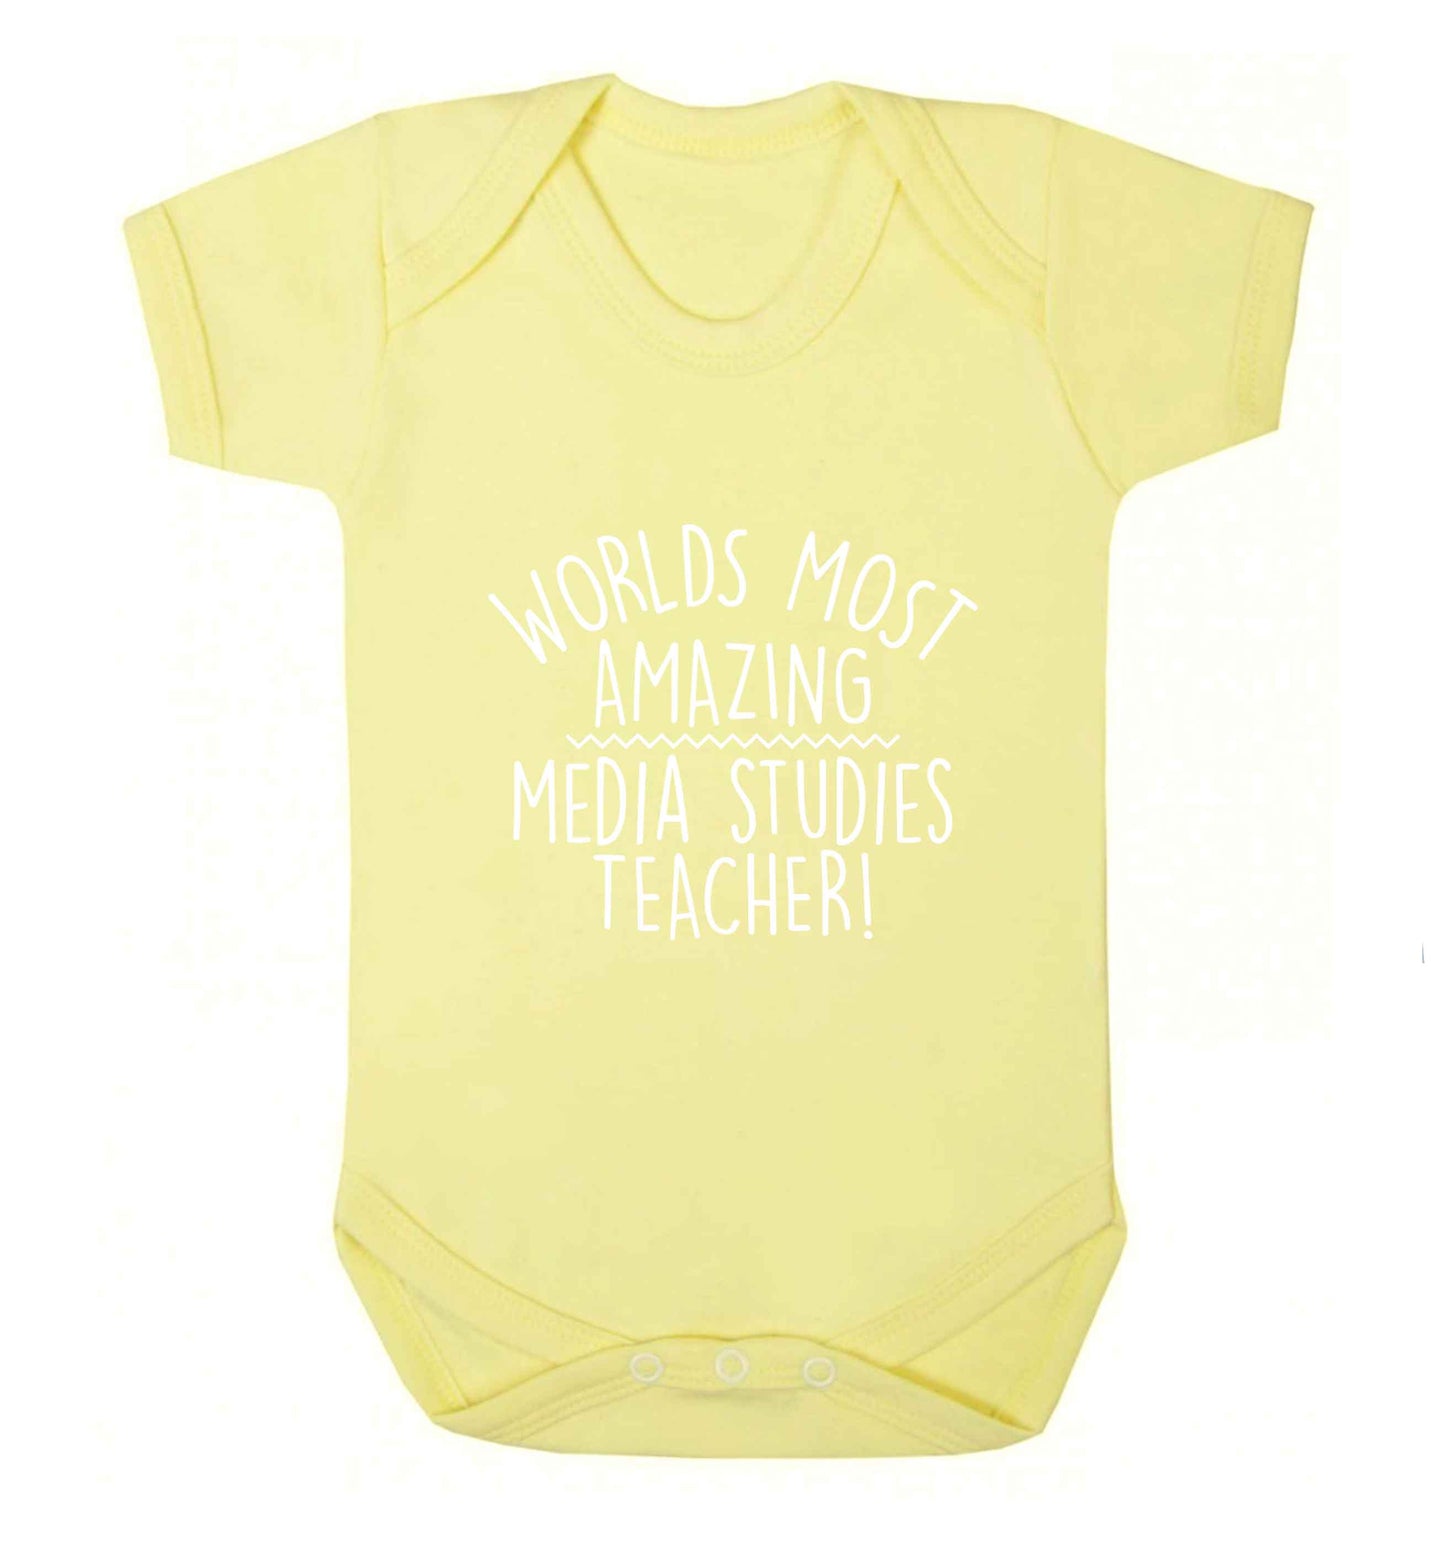 Worlds most amazing media studies teacher baby vest pale yellow 18-24 months